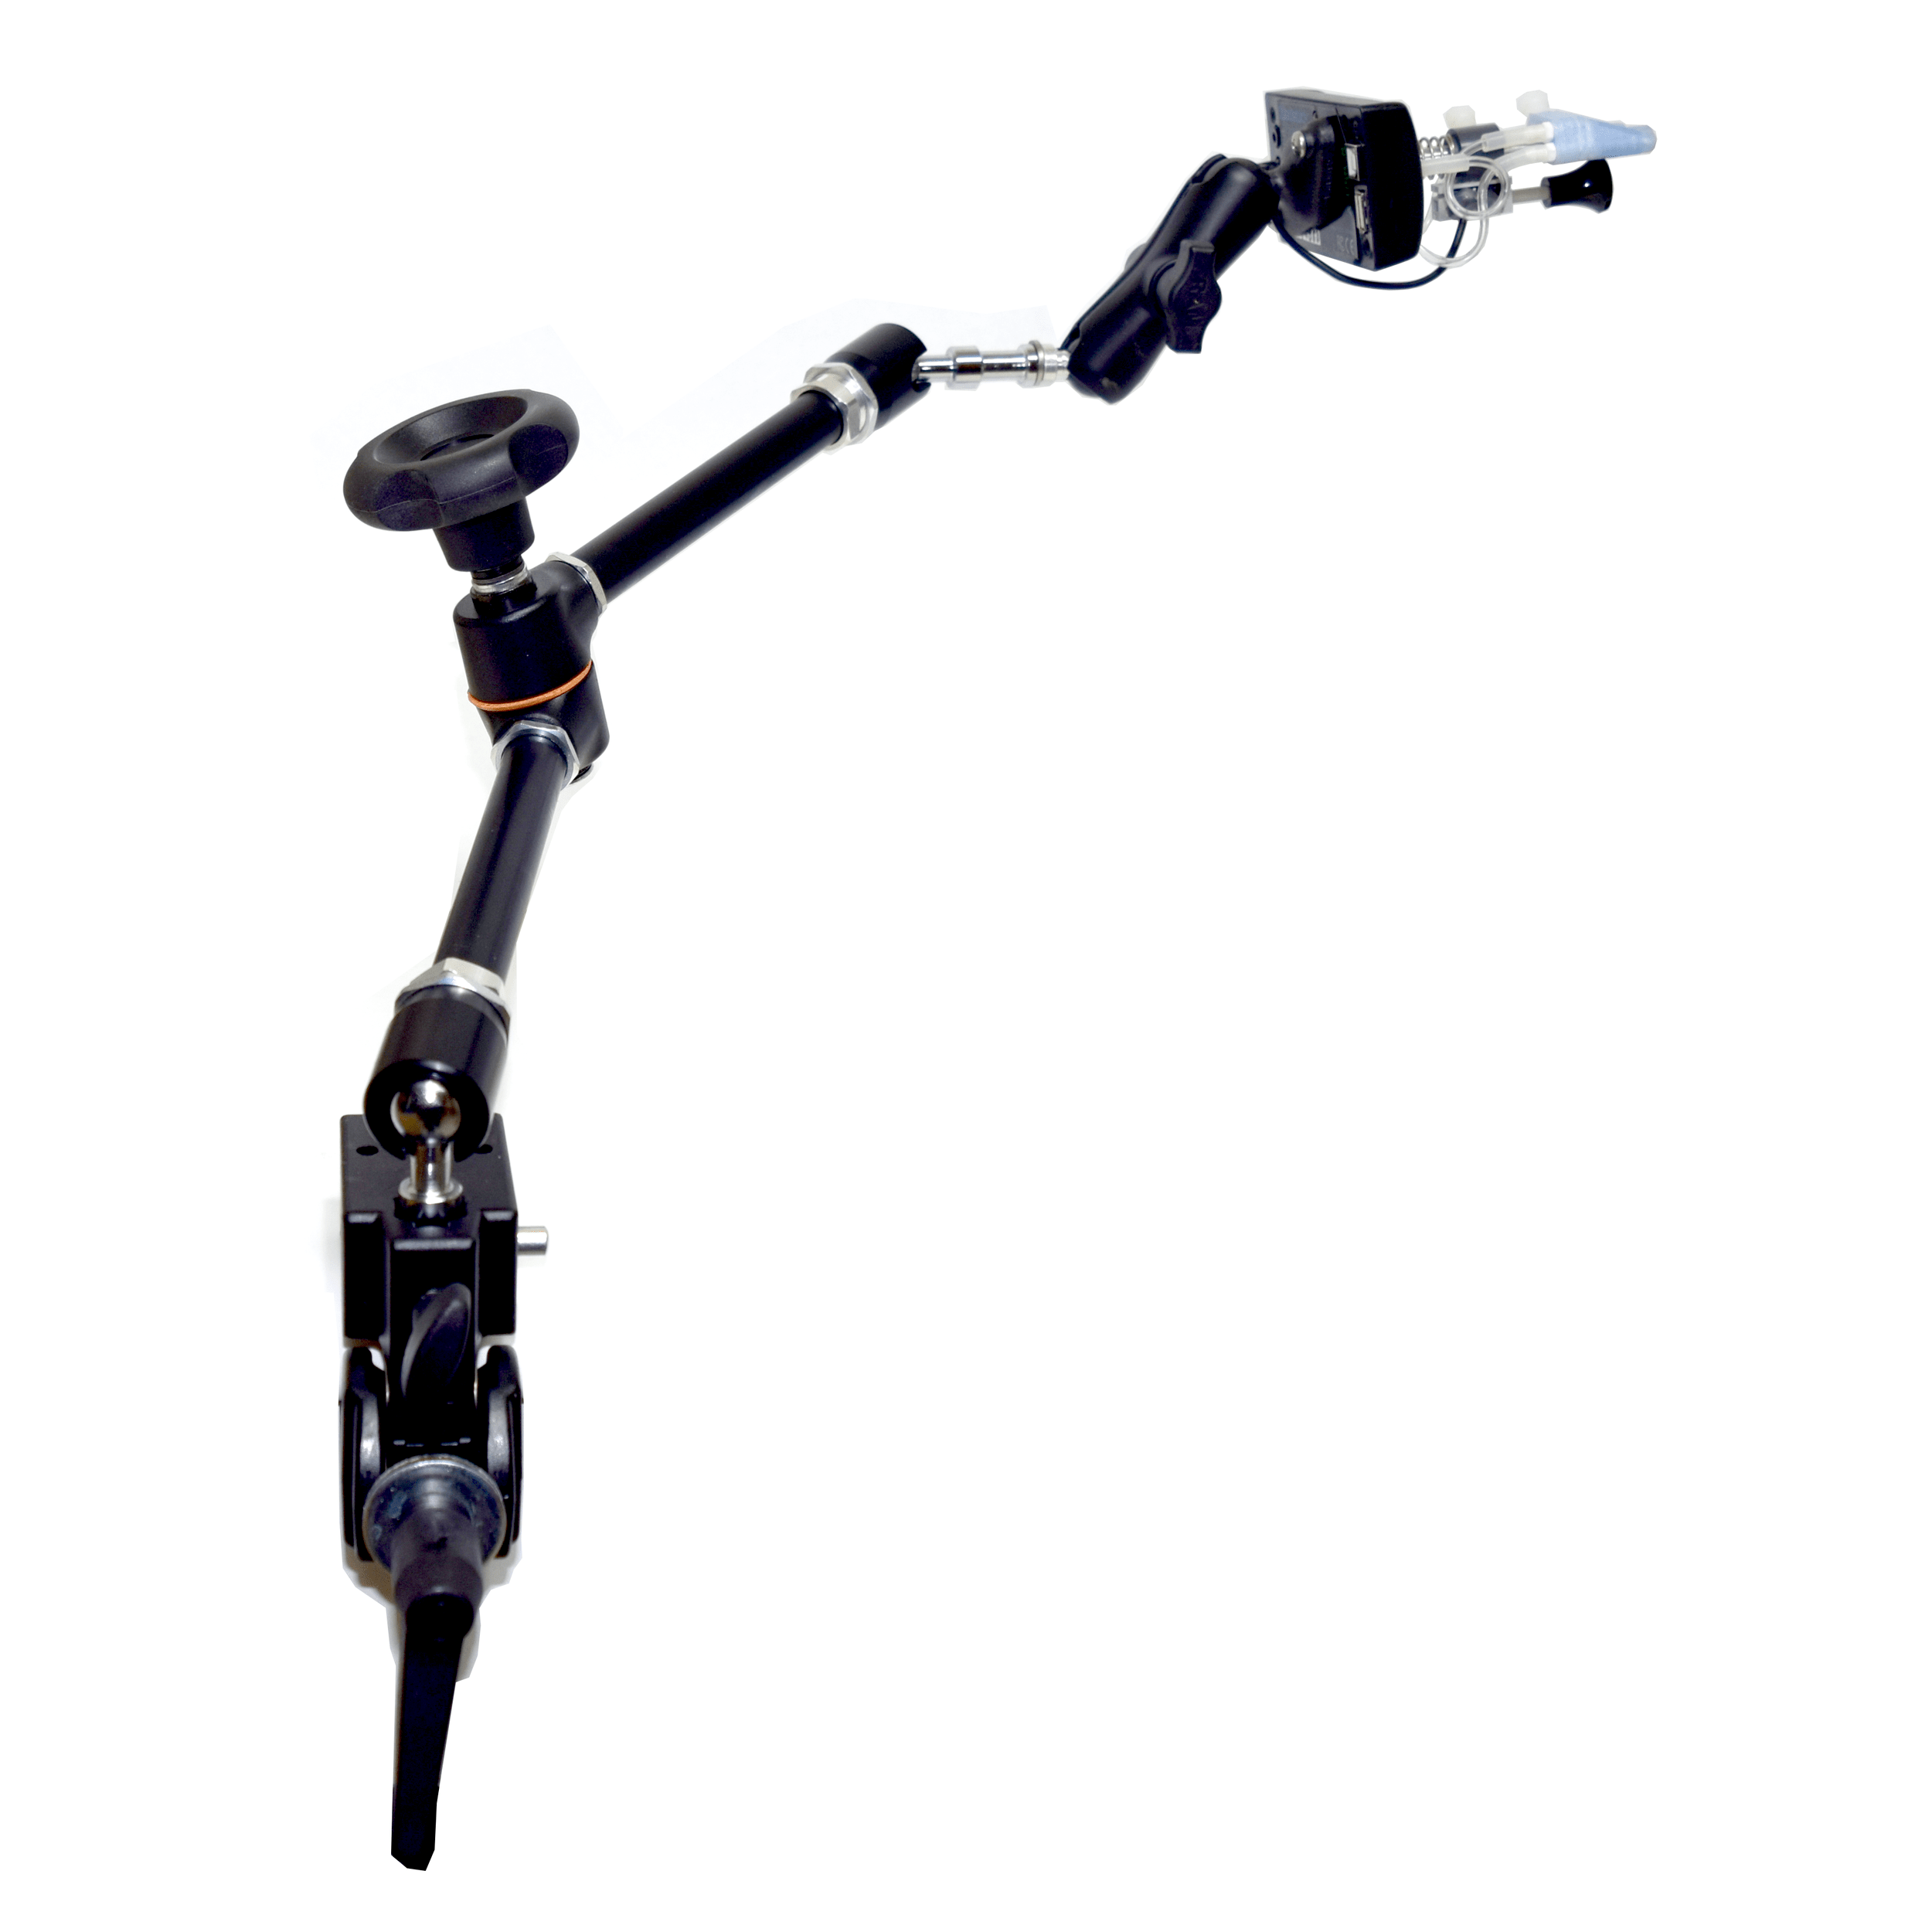 A long, black, flexible mount attached to a Quadstick.